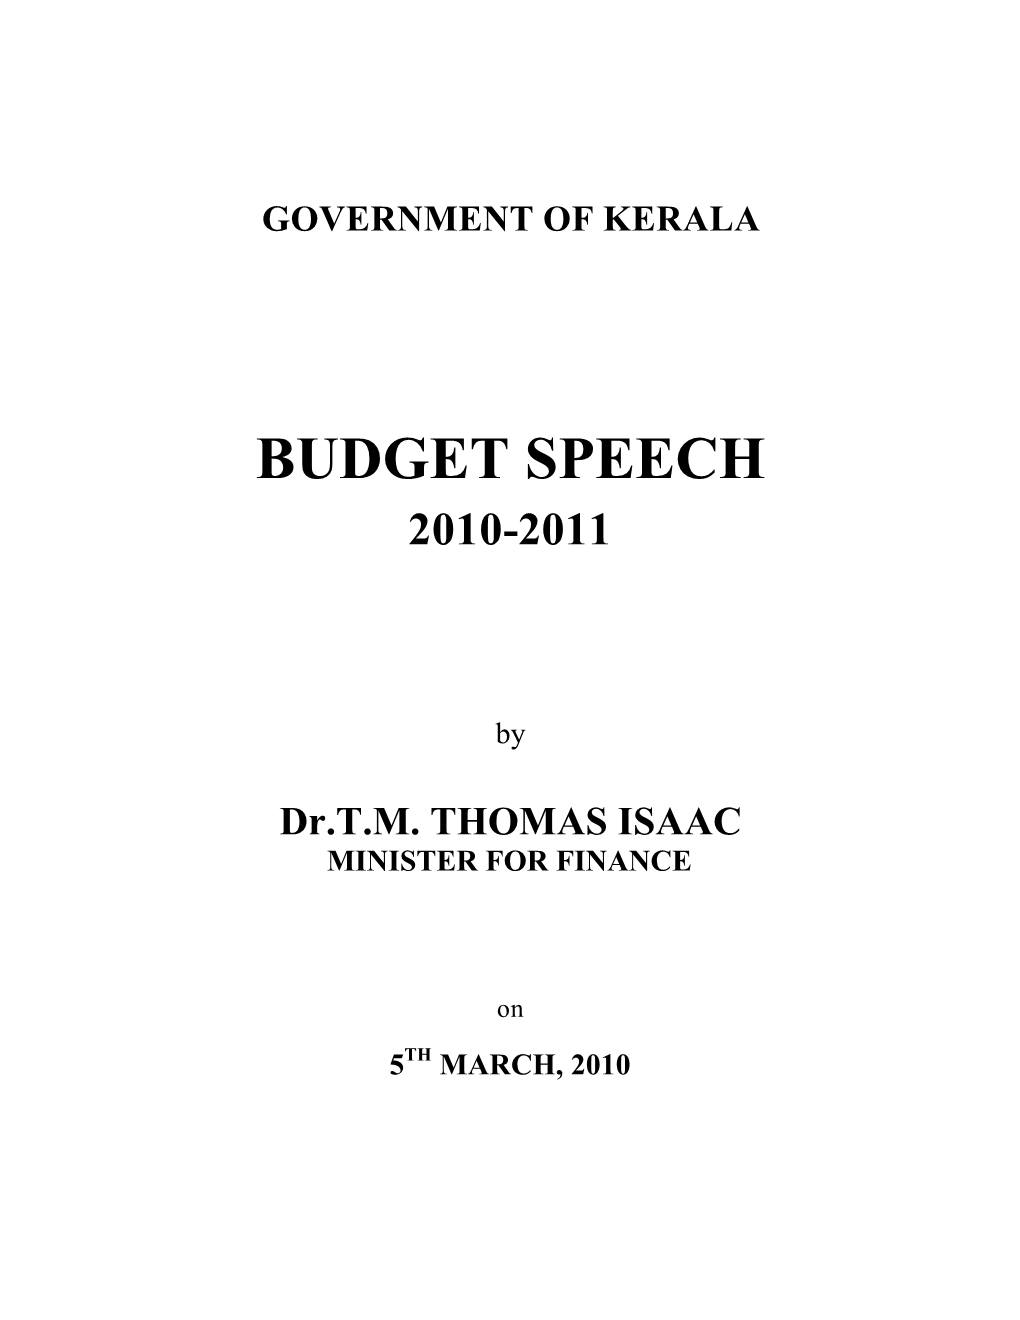 Budget Speech-English